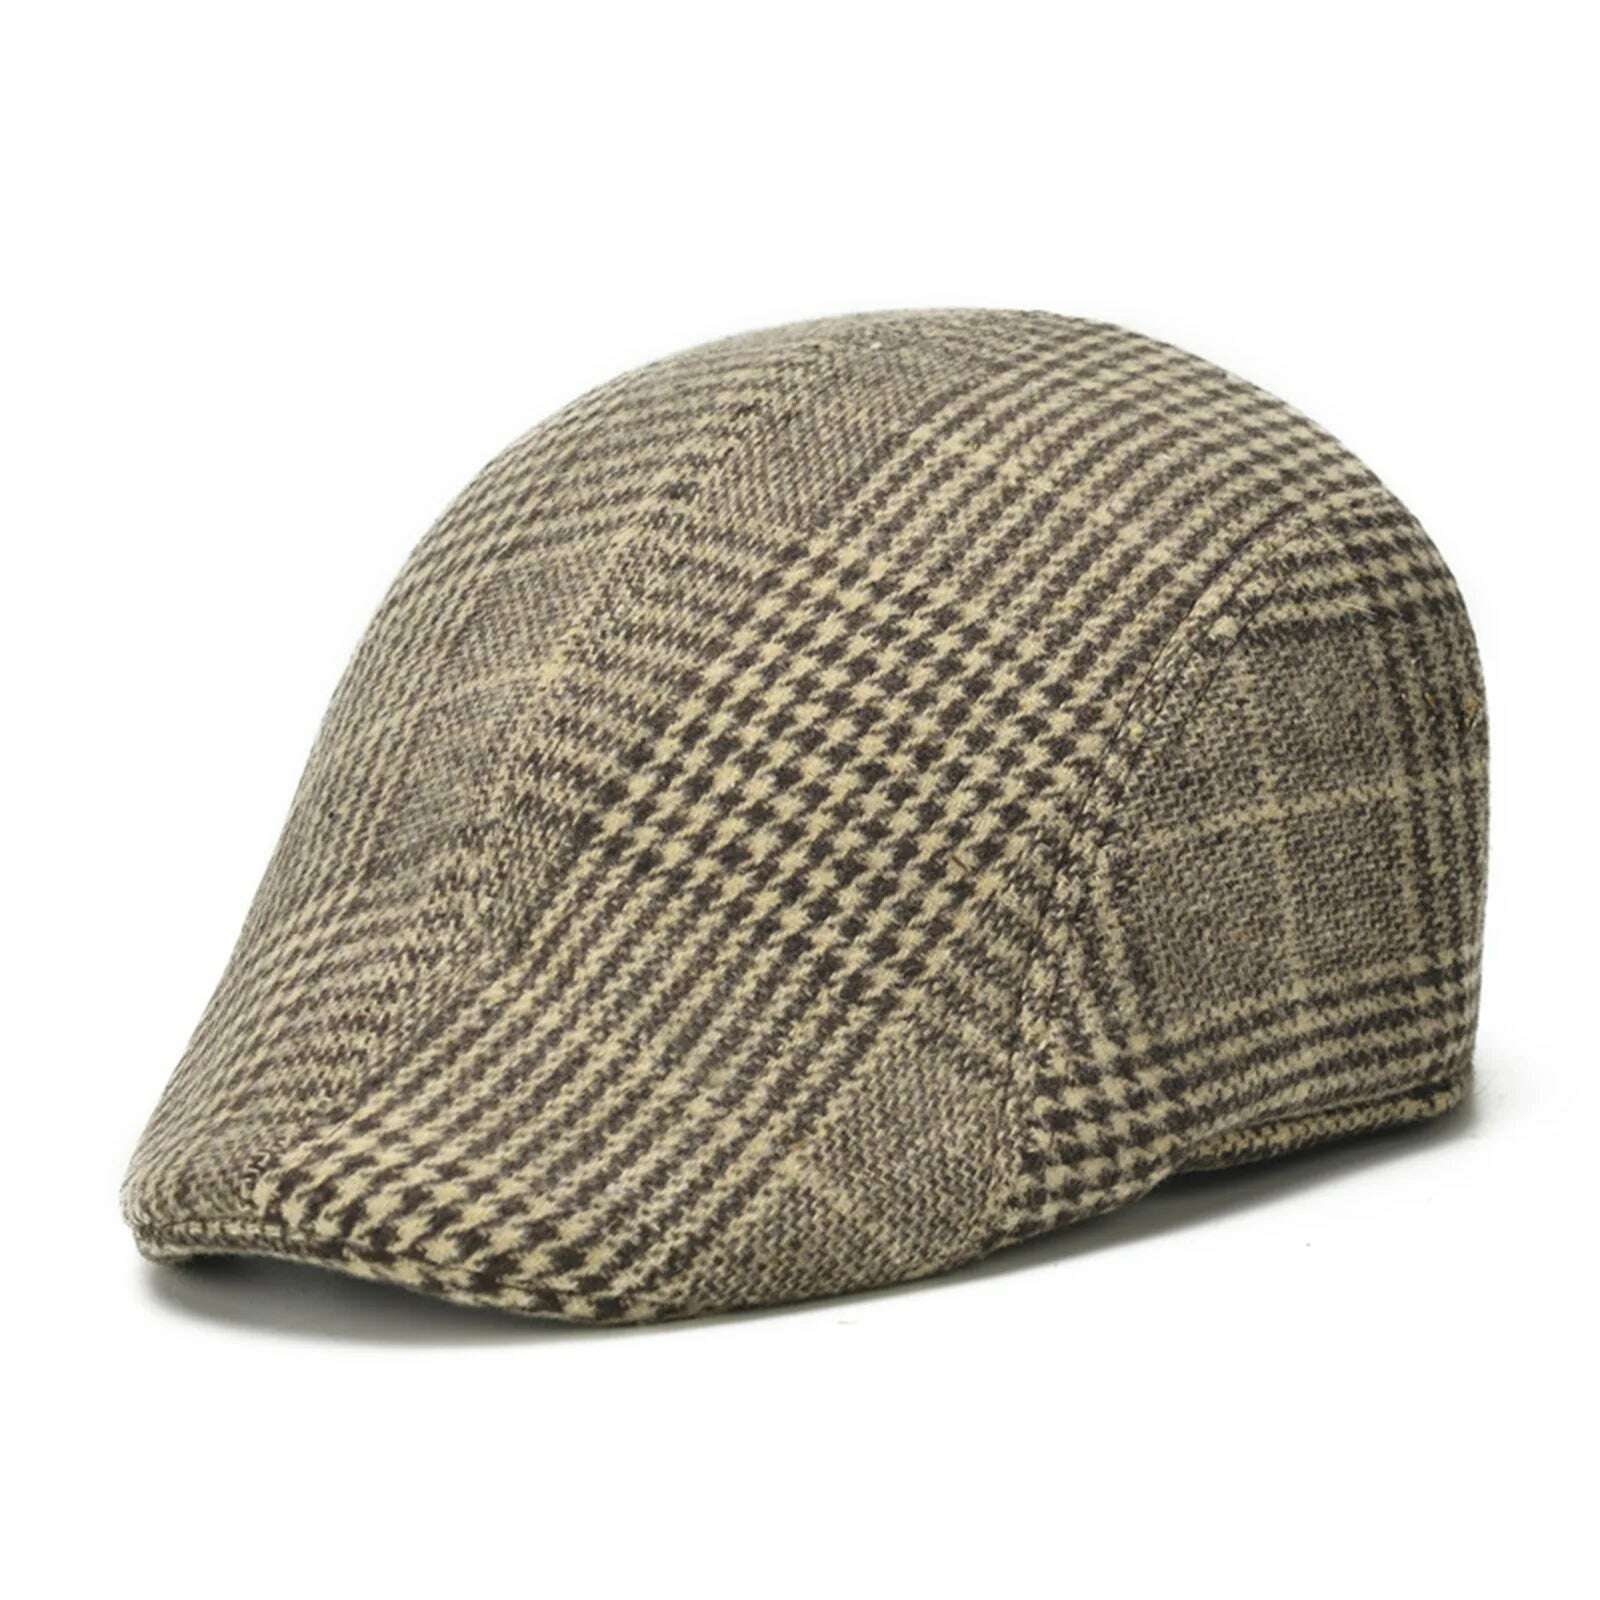 KIMLUD, Men's Cotton Plaid Berets Painter Caps Autumn Winter Hats British Style Herringbone Newsboy Hat Flat Peaked Cap for Dad Gorra, Coffee A, KIMLUD Women's Clothes